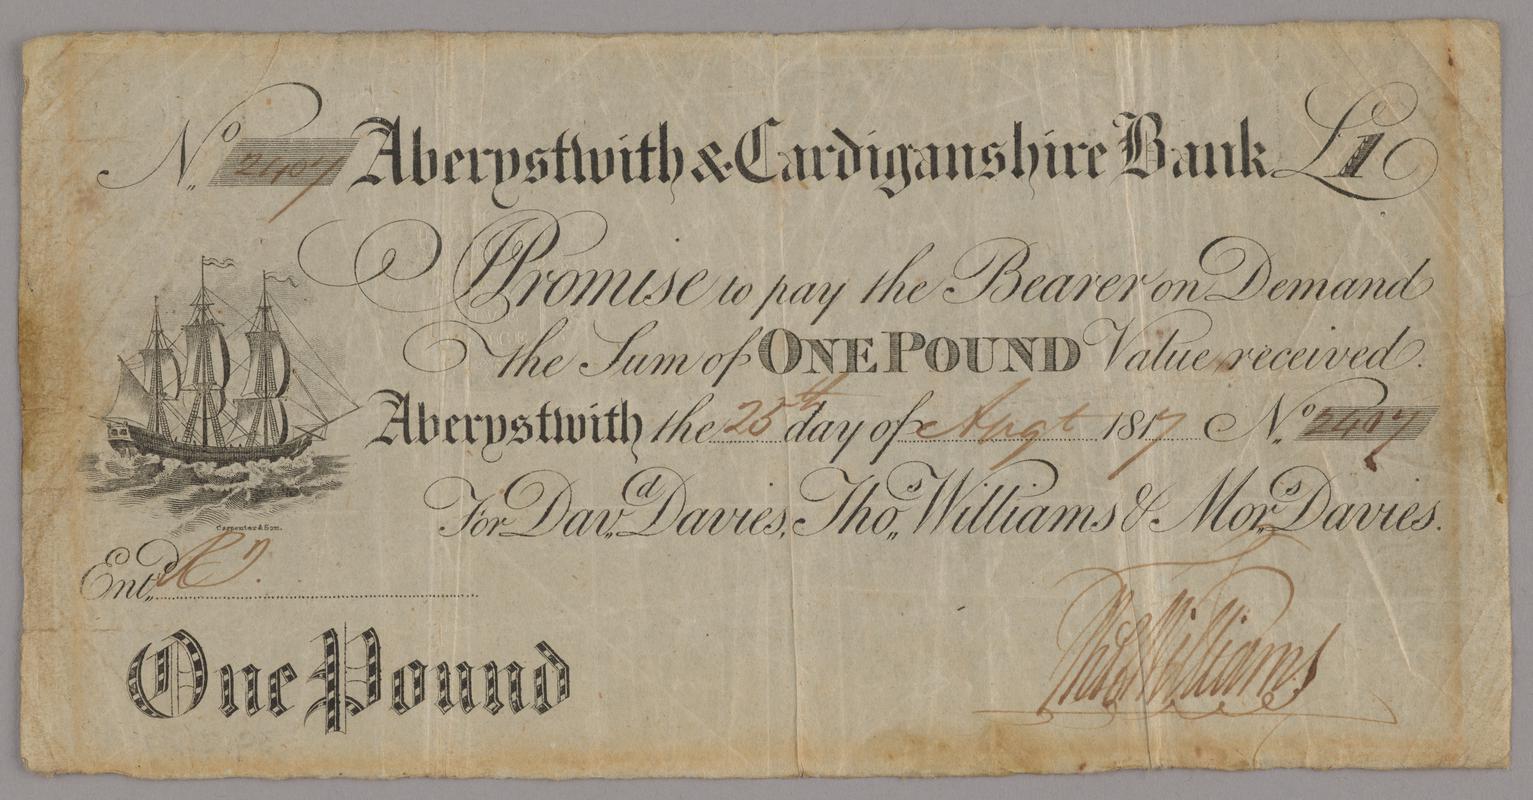 Aberystwith & Cardiganshire Bank one pound bank note, 1817